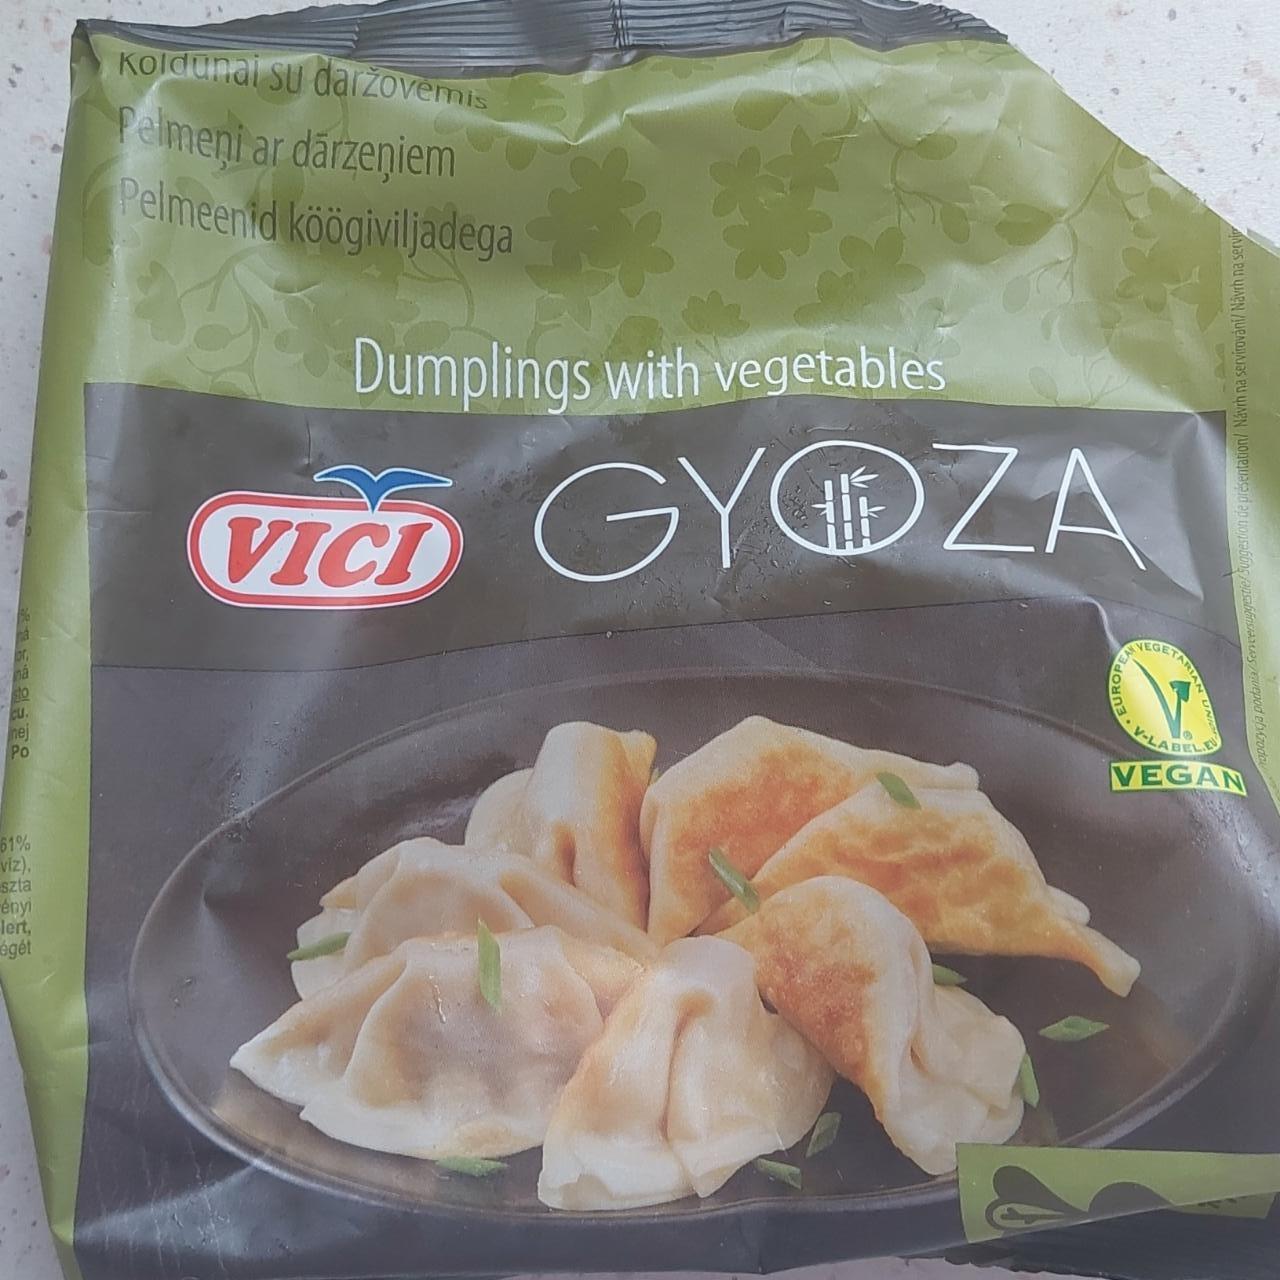 Képek - Gyoza Dumplings with vegetables Vici